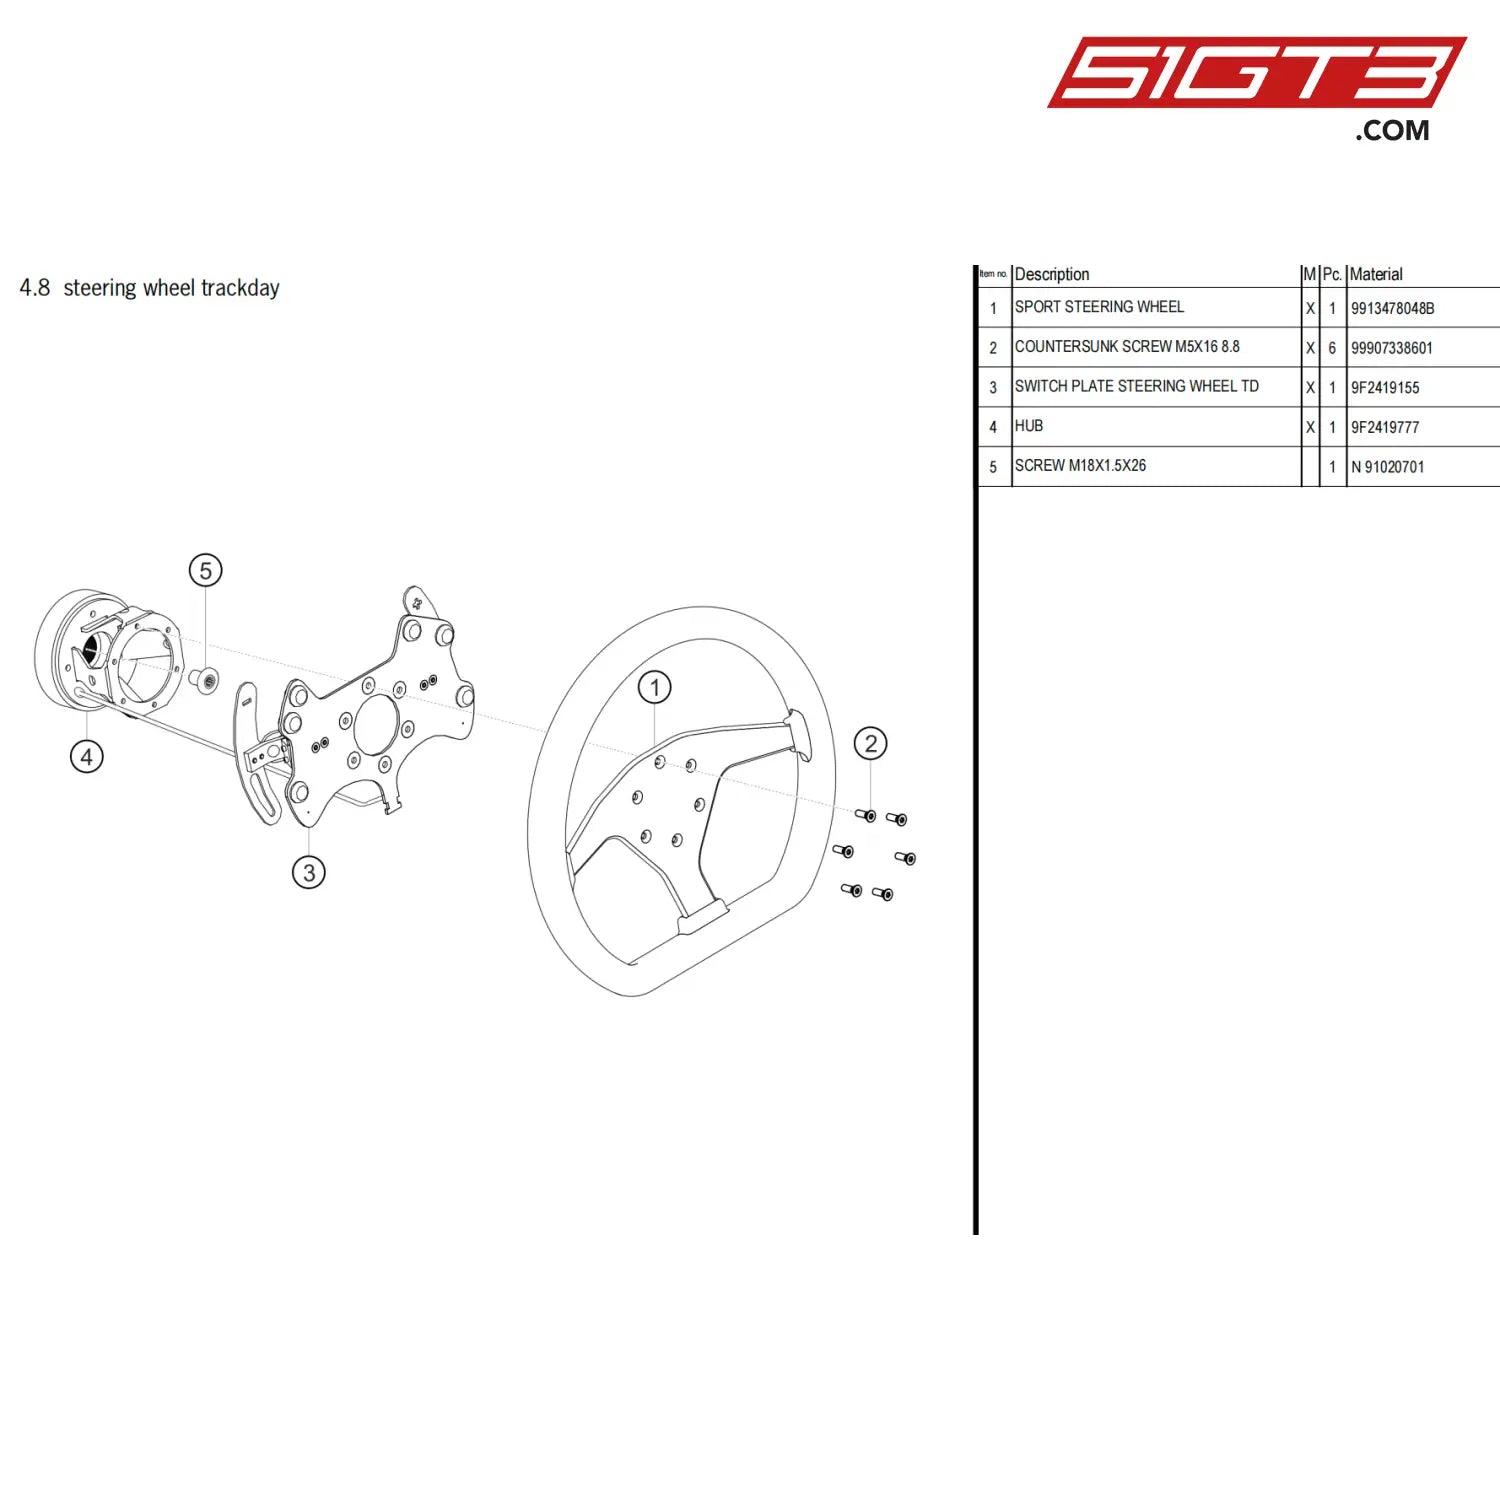 Sport Steering Wheel - 9913478048B [Porsche 718 Cayman Gt4 Clubsport] Steering Wheel Trackday